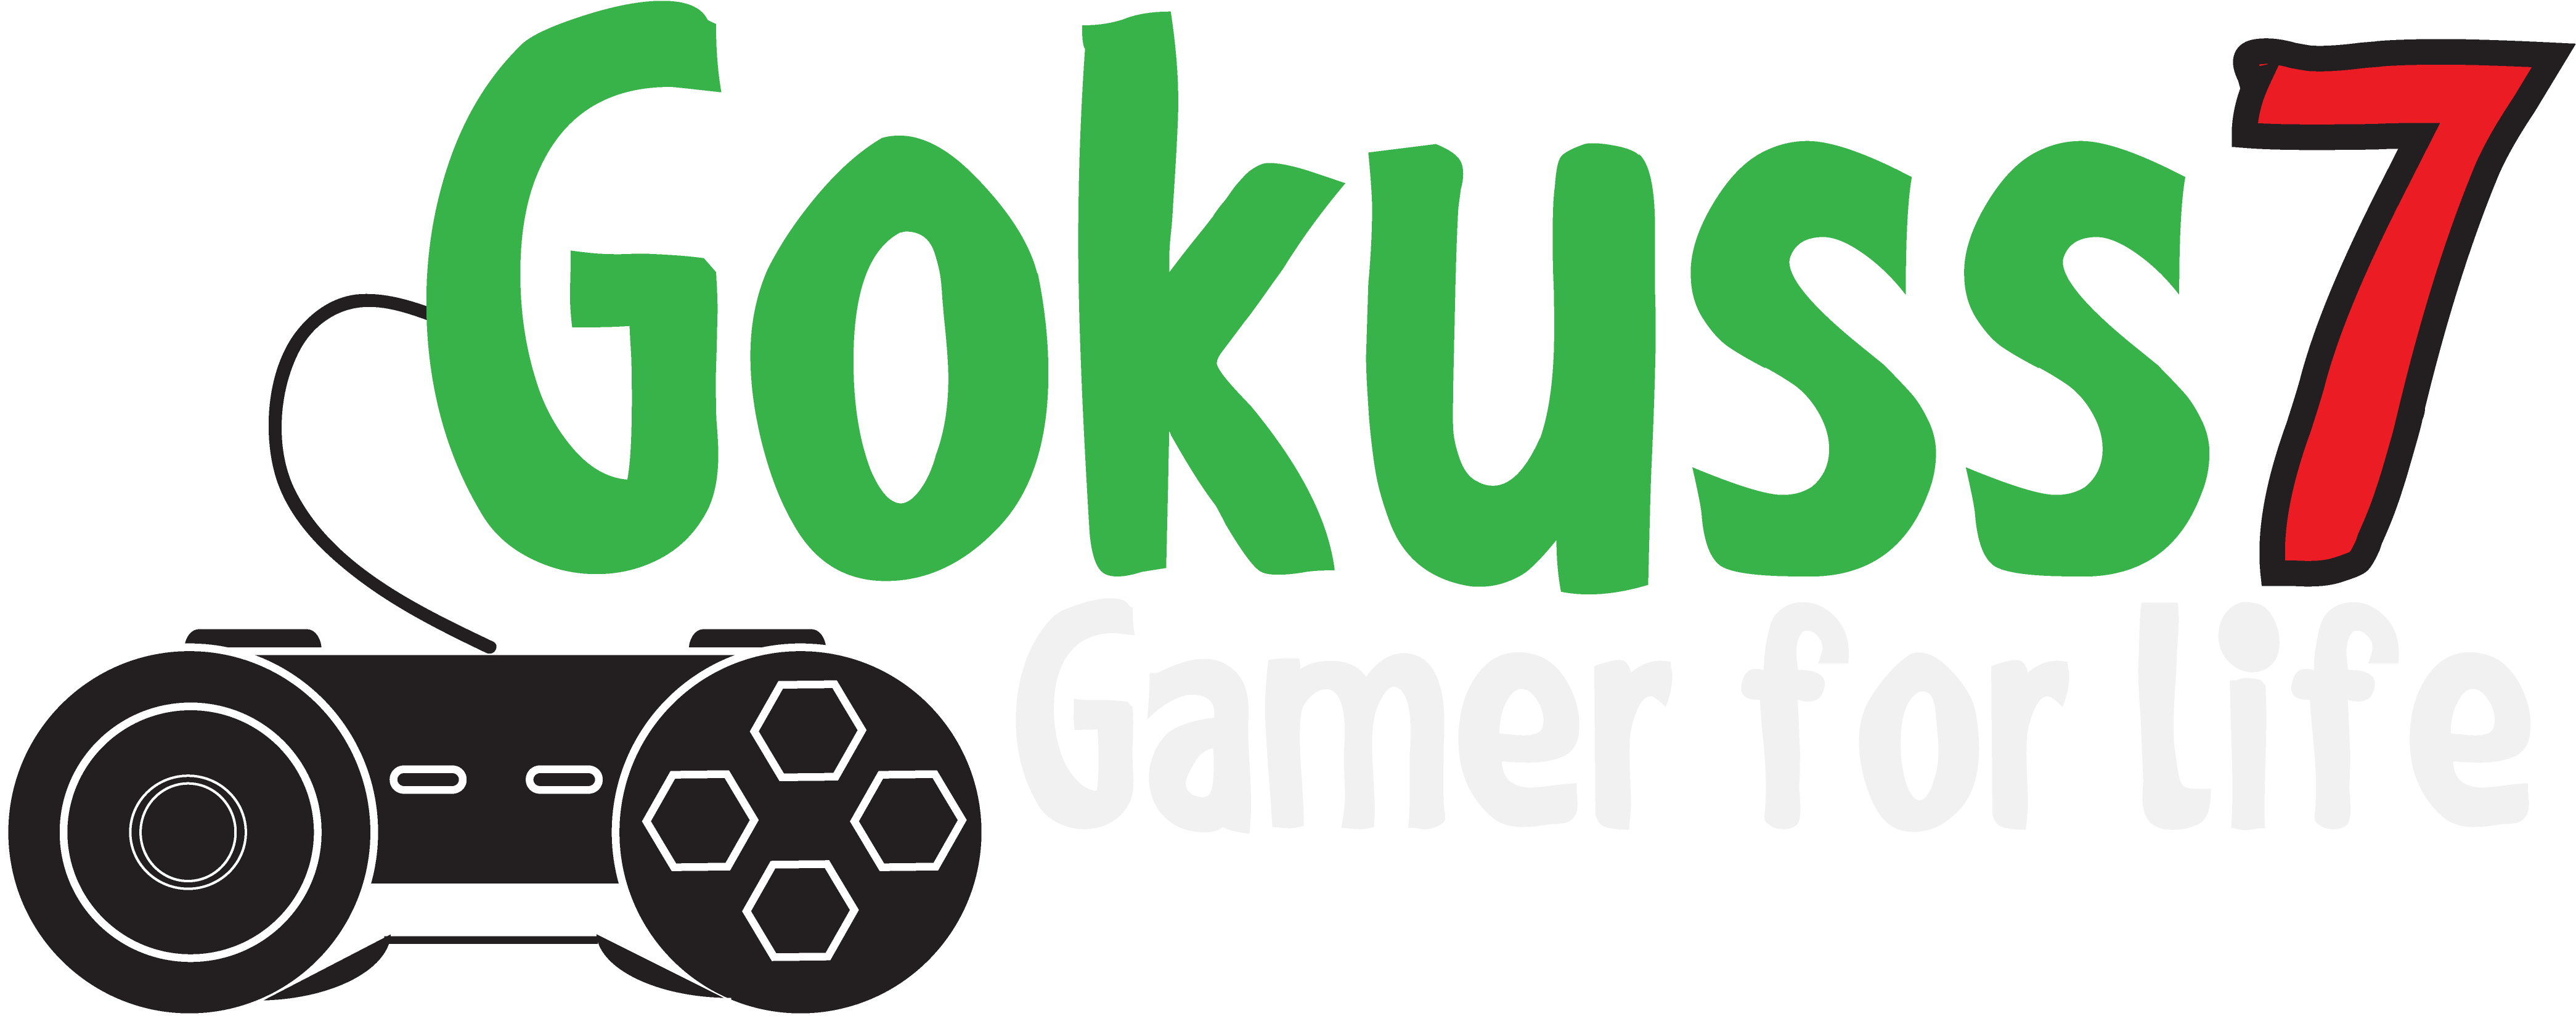 Gokuss7-logo Clipart (4185x1832), Png Download